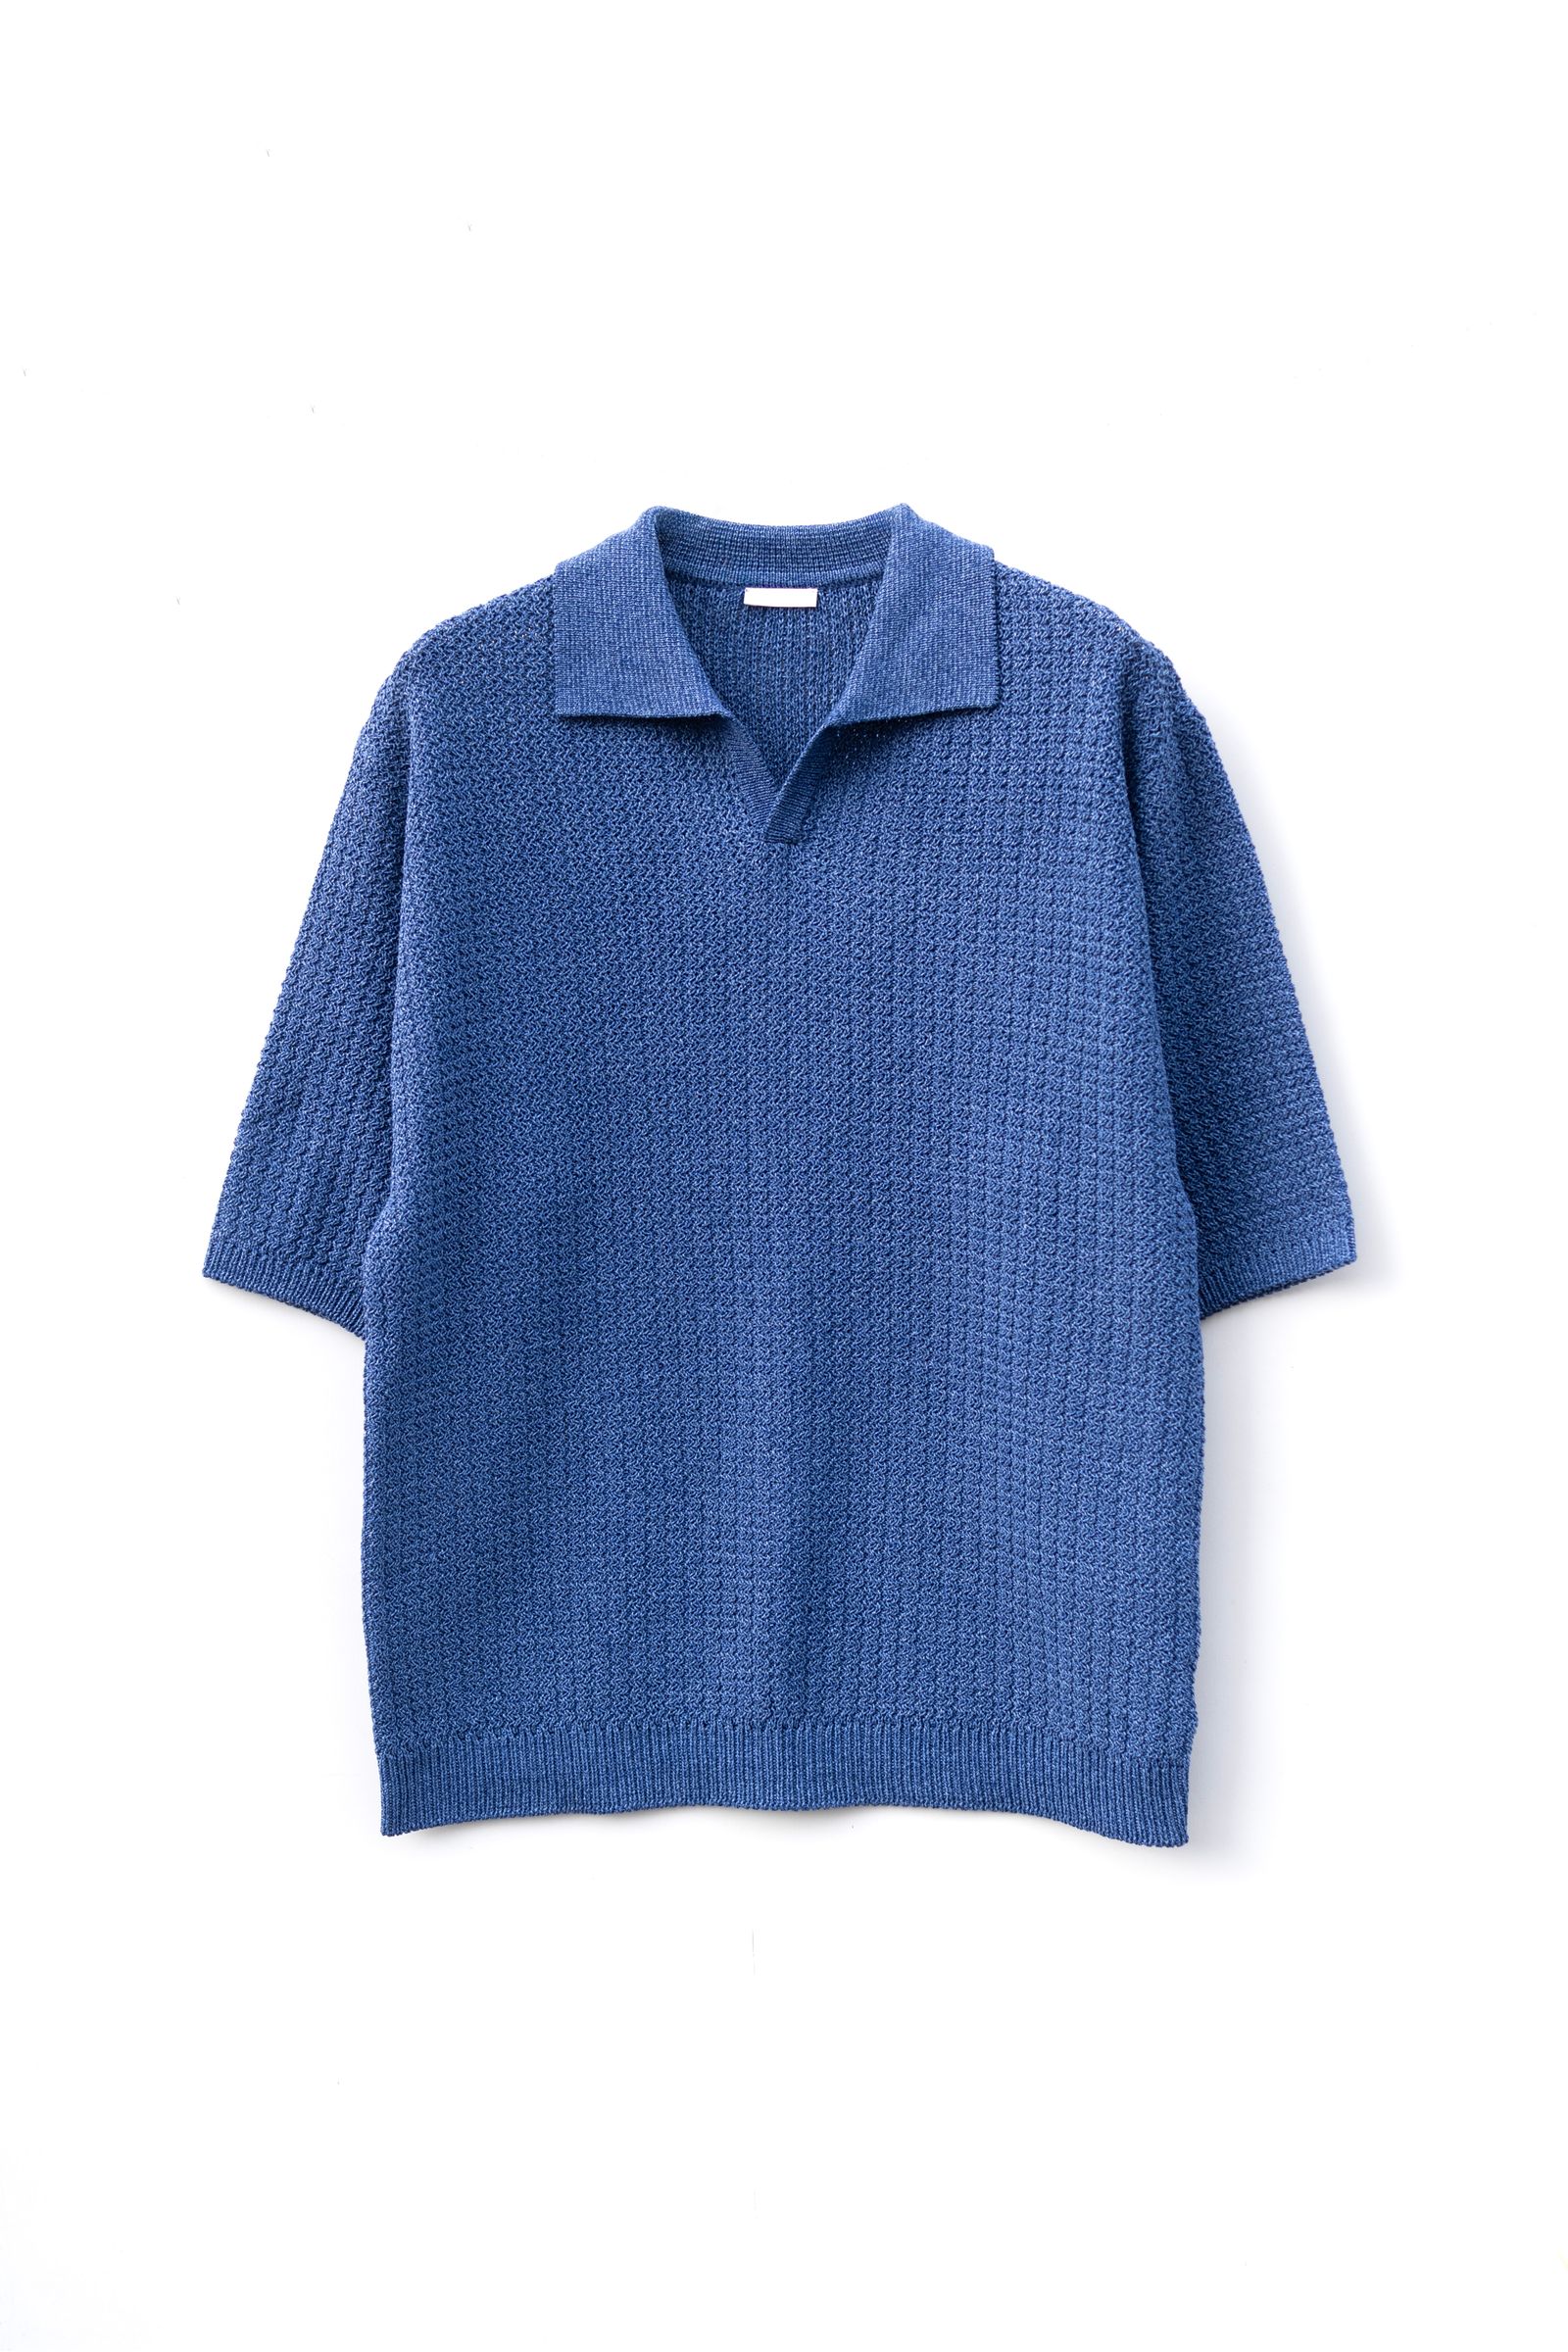 Blanc YM - Skipper knit Shirt / White | Retikle Online Store